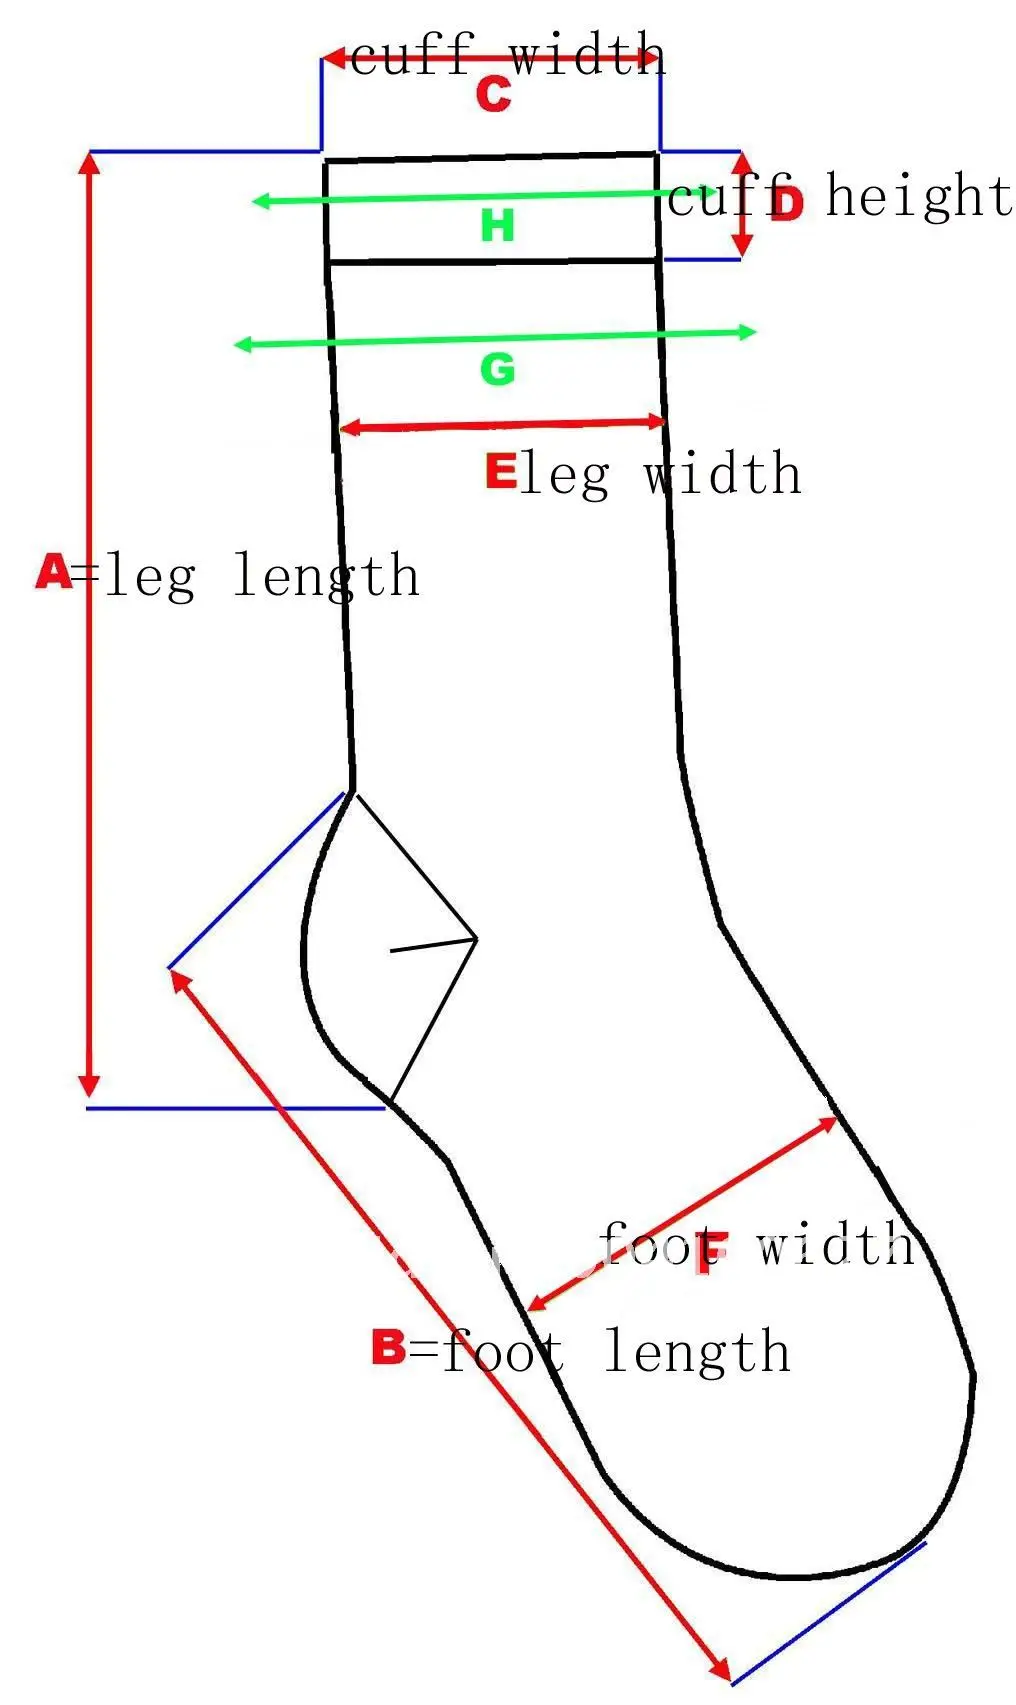 Sock Size Chart Cm